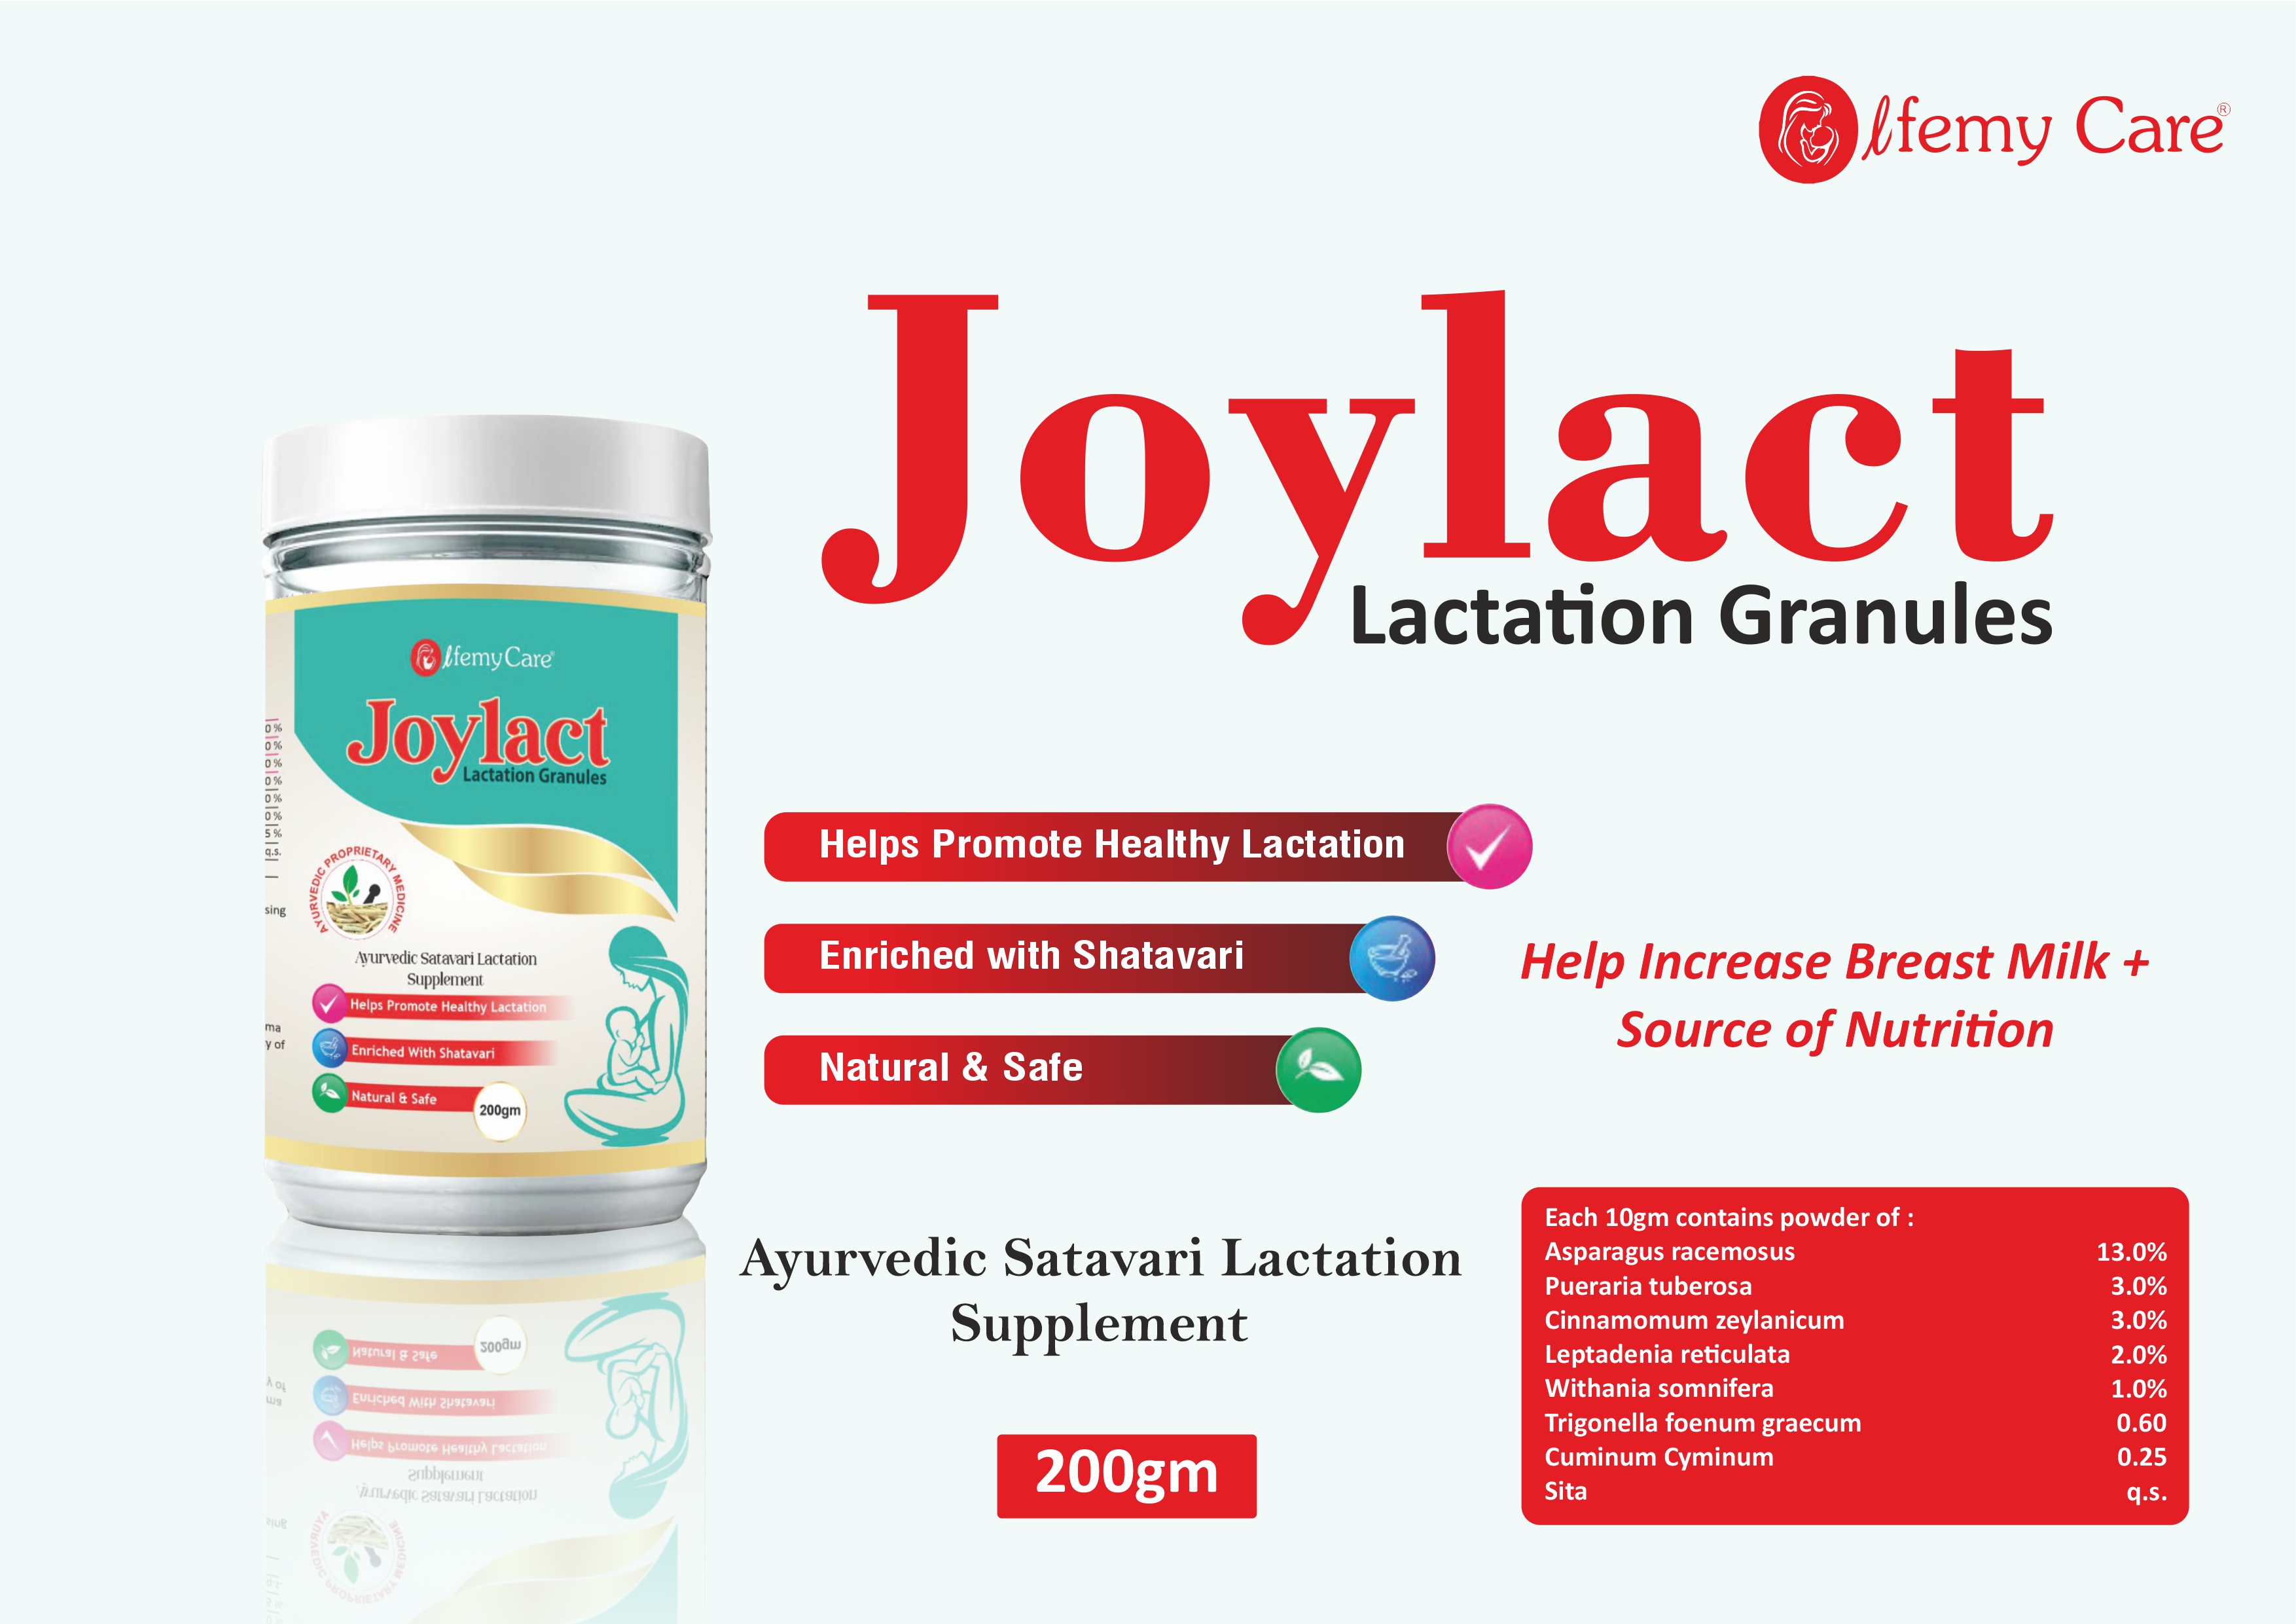 Product Name: Joylact, Compositions of Joylact are Lactation Granules - Olfemy Care